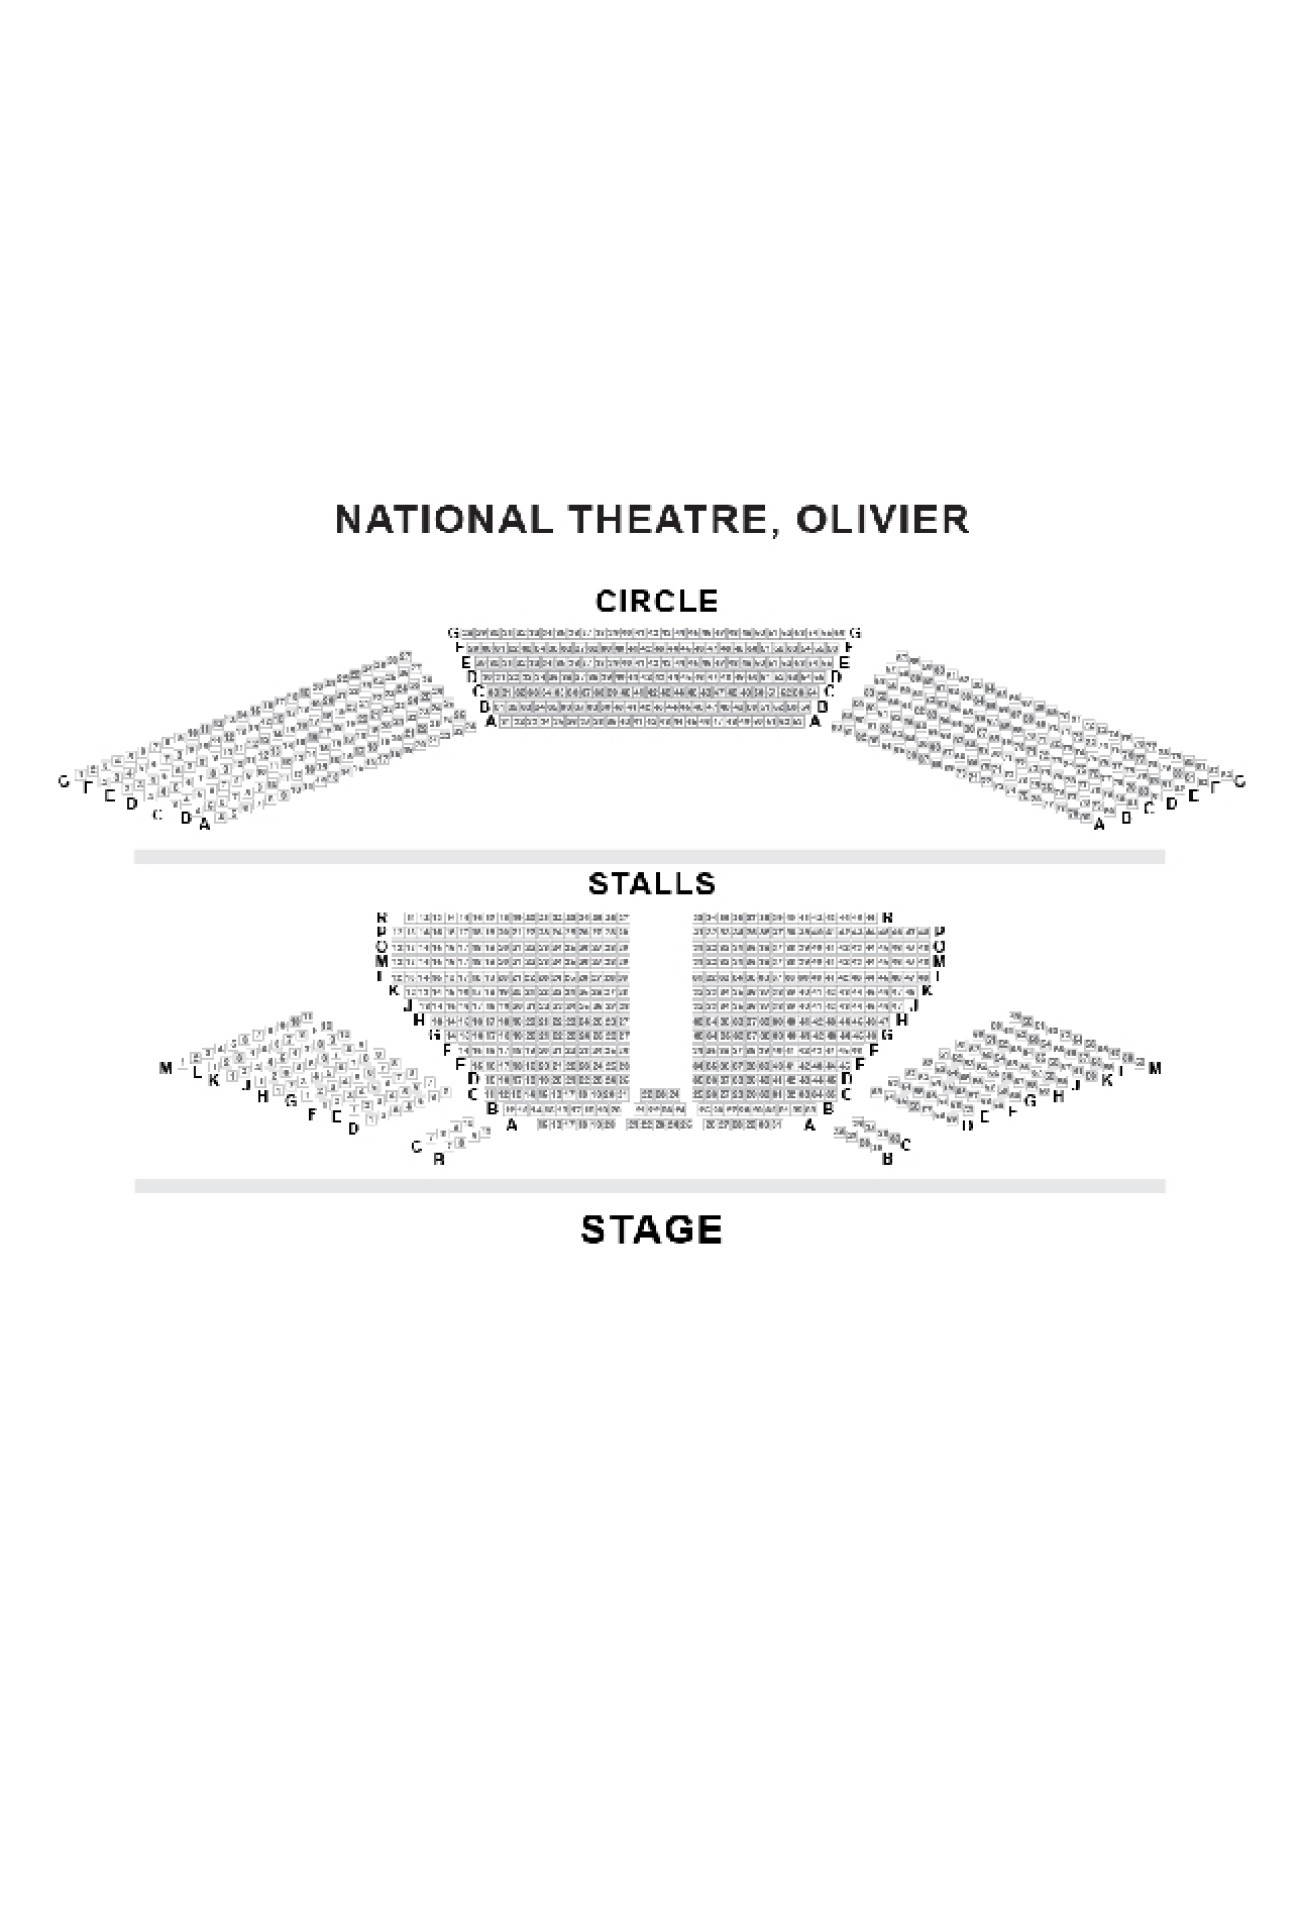 Olivier Theatre (National Theatre) Platsöversikt